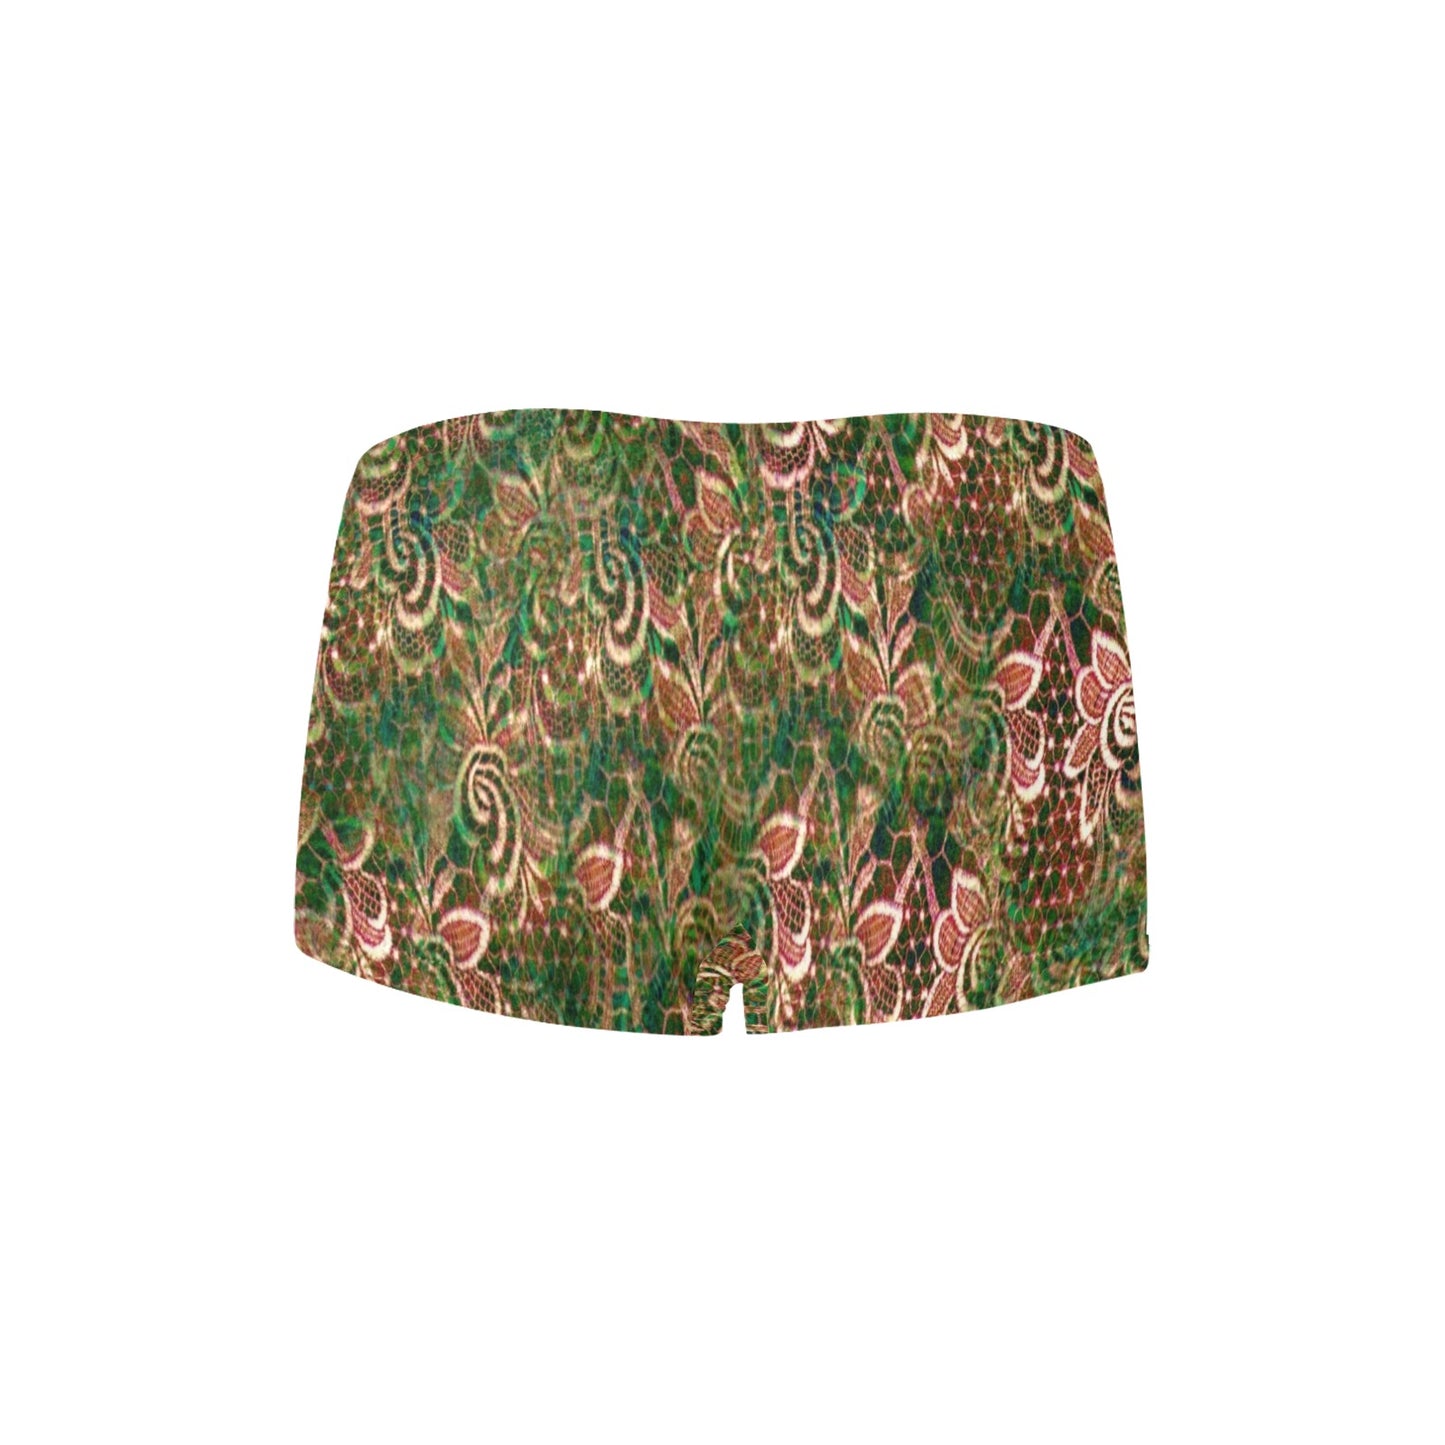 Printed Lace Boyshorts, daisy dukes, pum pum shorts, shortie shorts , design 34